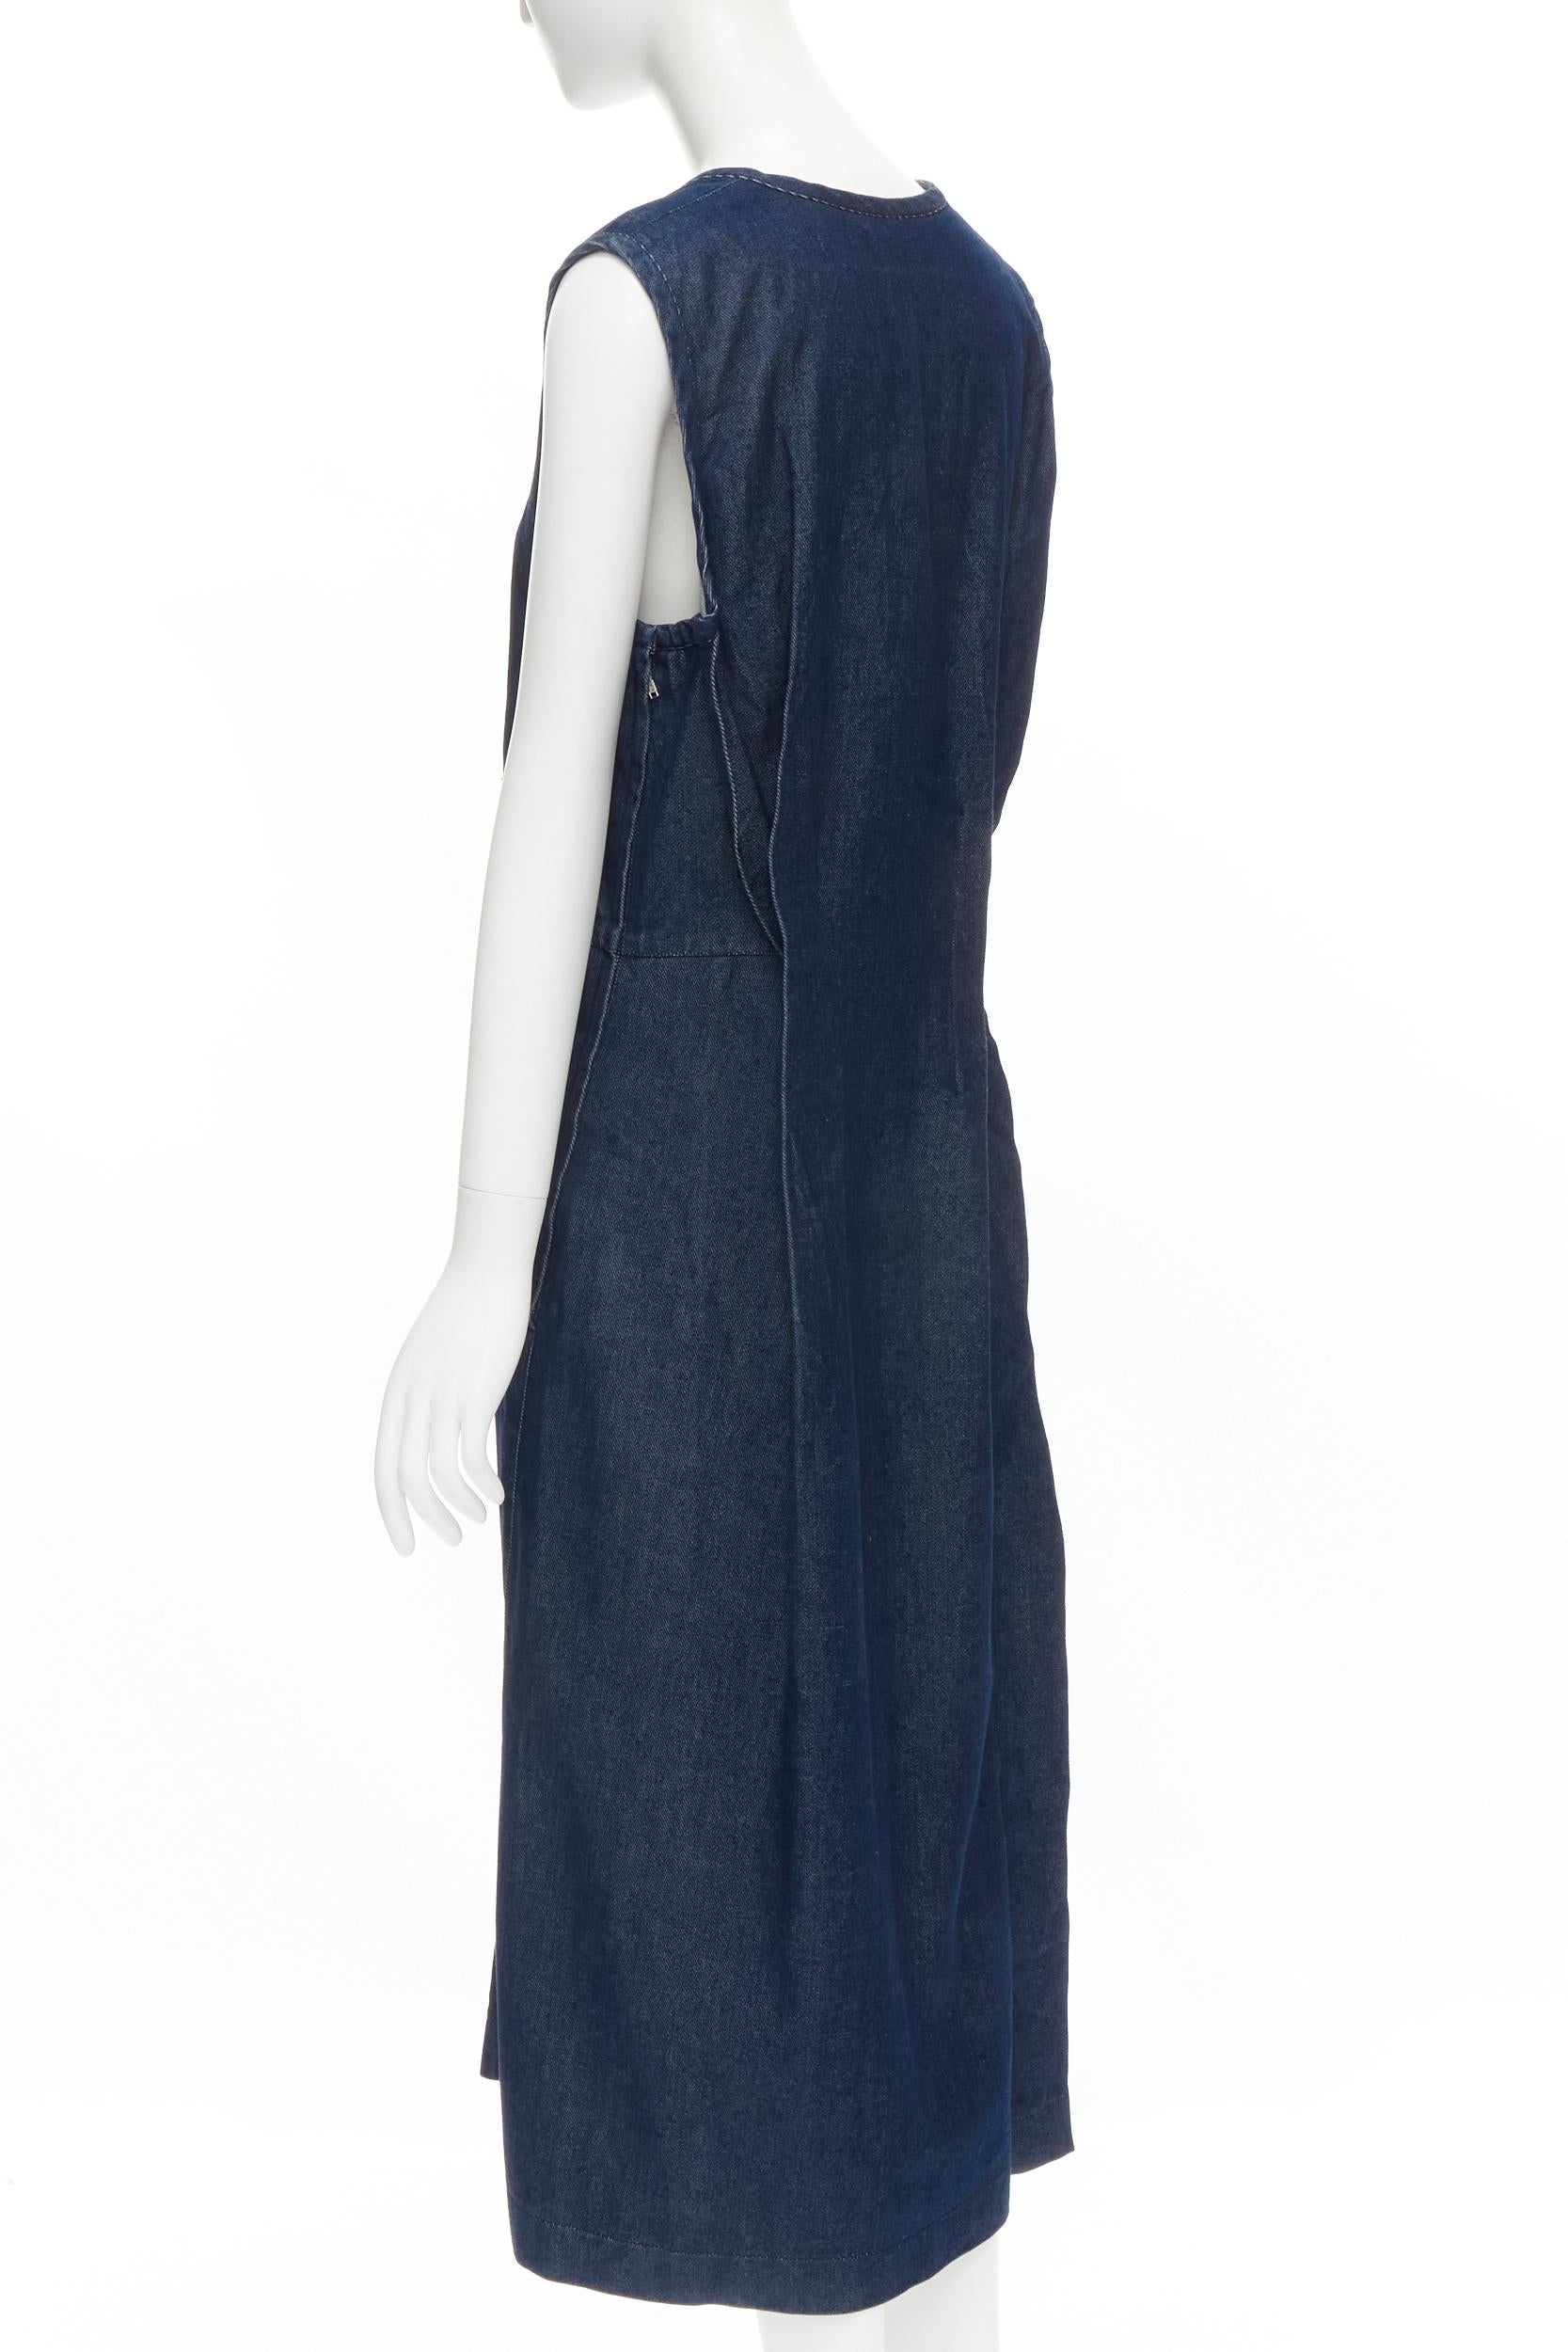 COMME DES GARCONS Vintage 1991 indigo blue denim pinched seam dress M For Sale 1